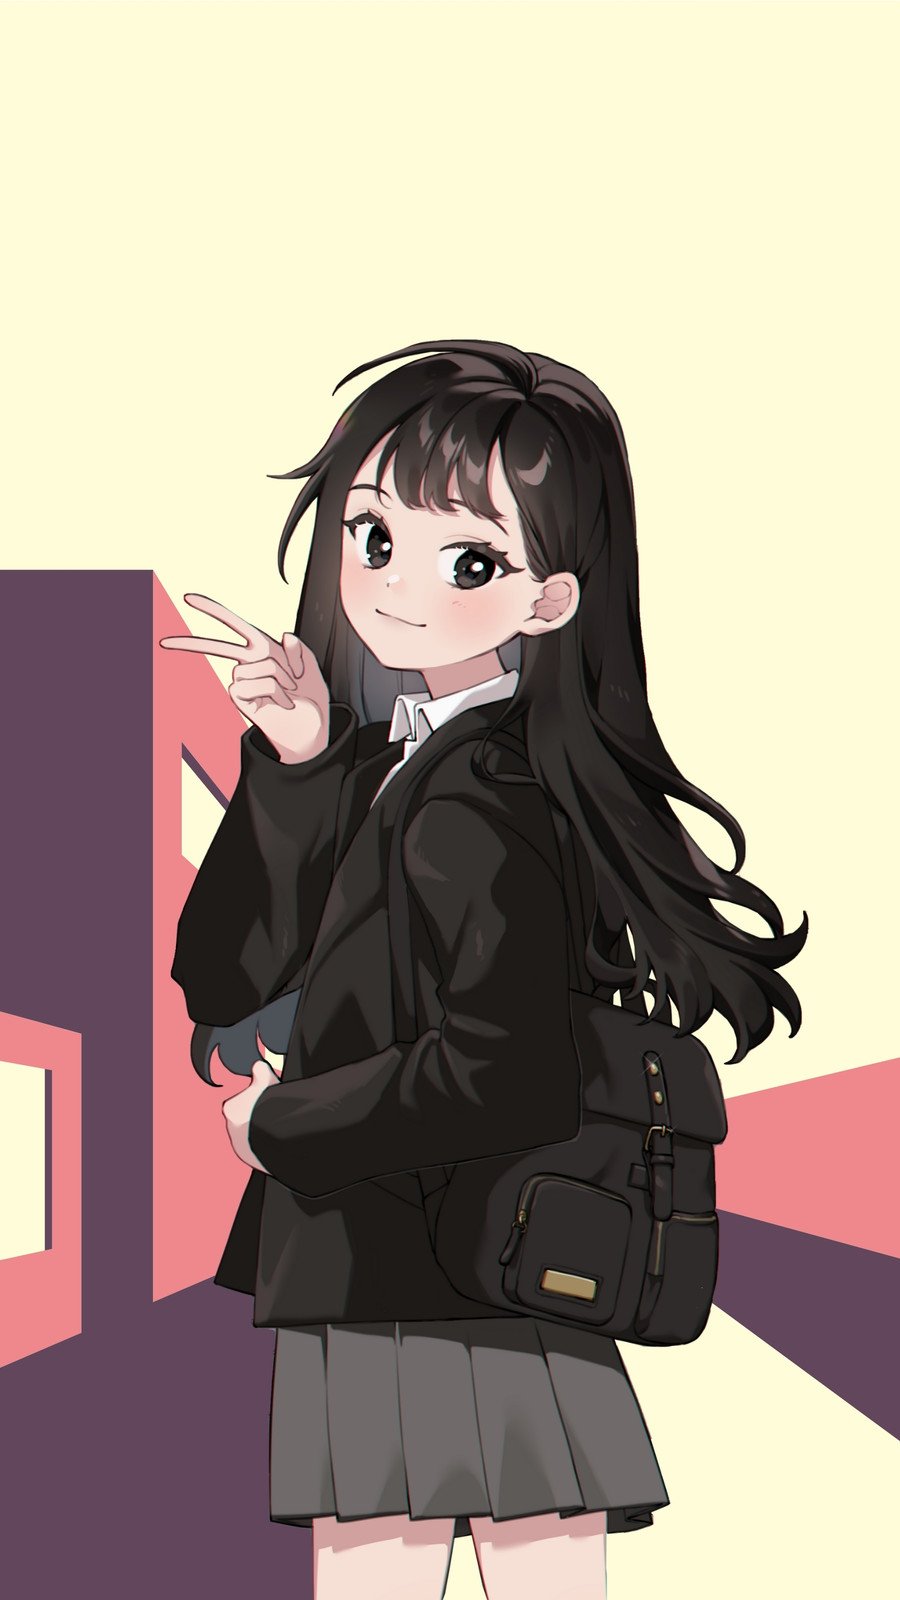 Premium AI Image  A sad anime character with a black hoodie.